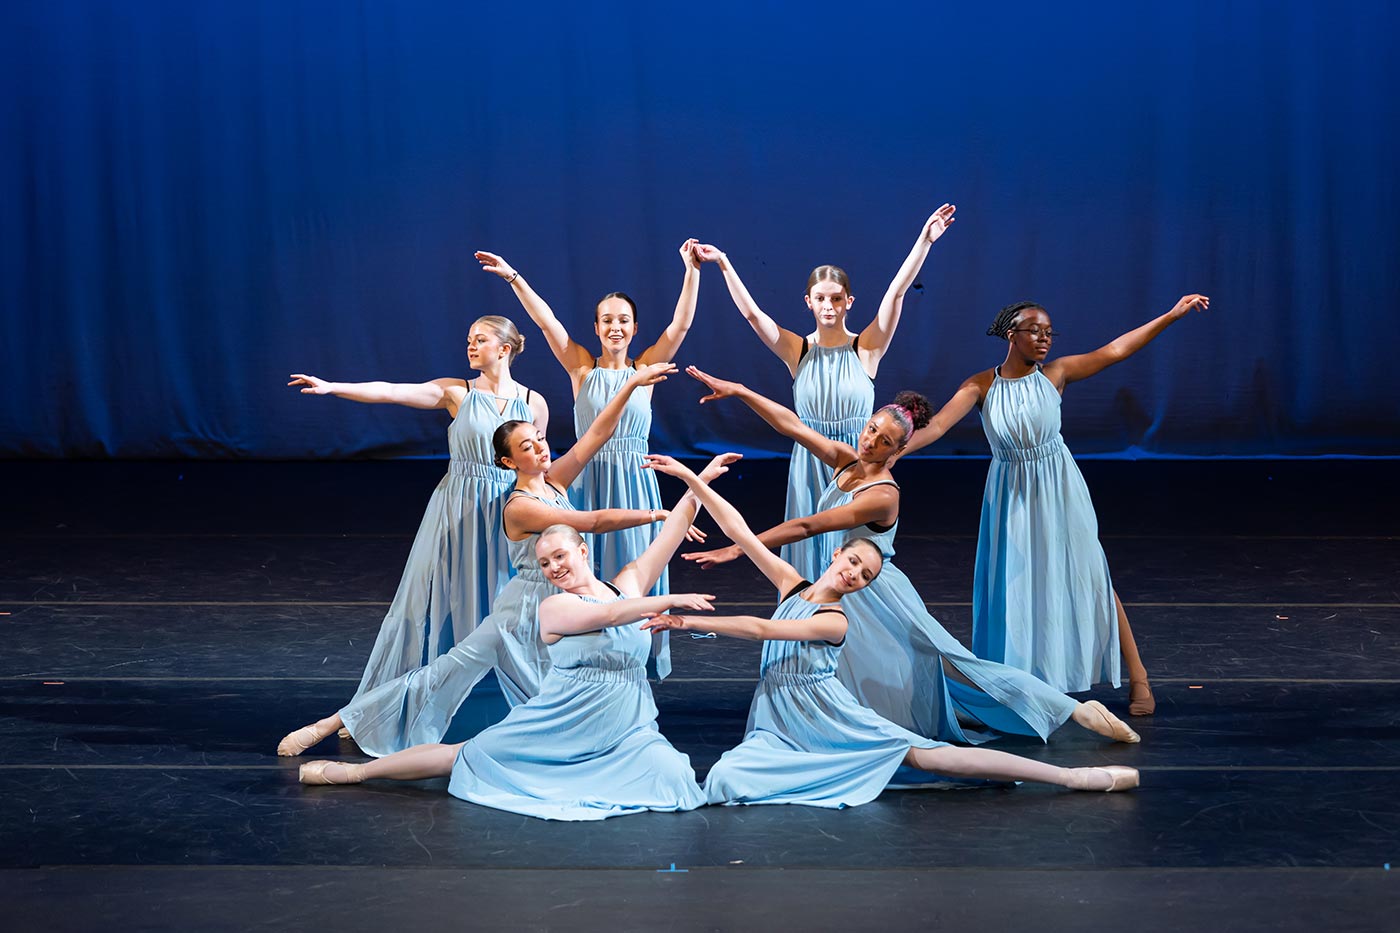 Ballet dancers in light blue dresses performing an elegant ensemble piece on stage